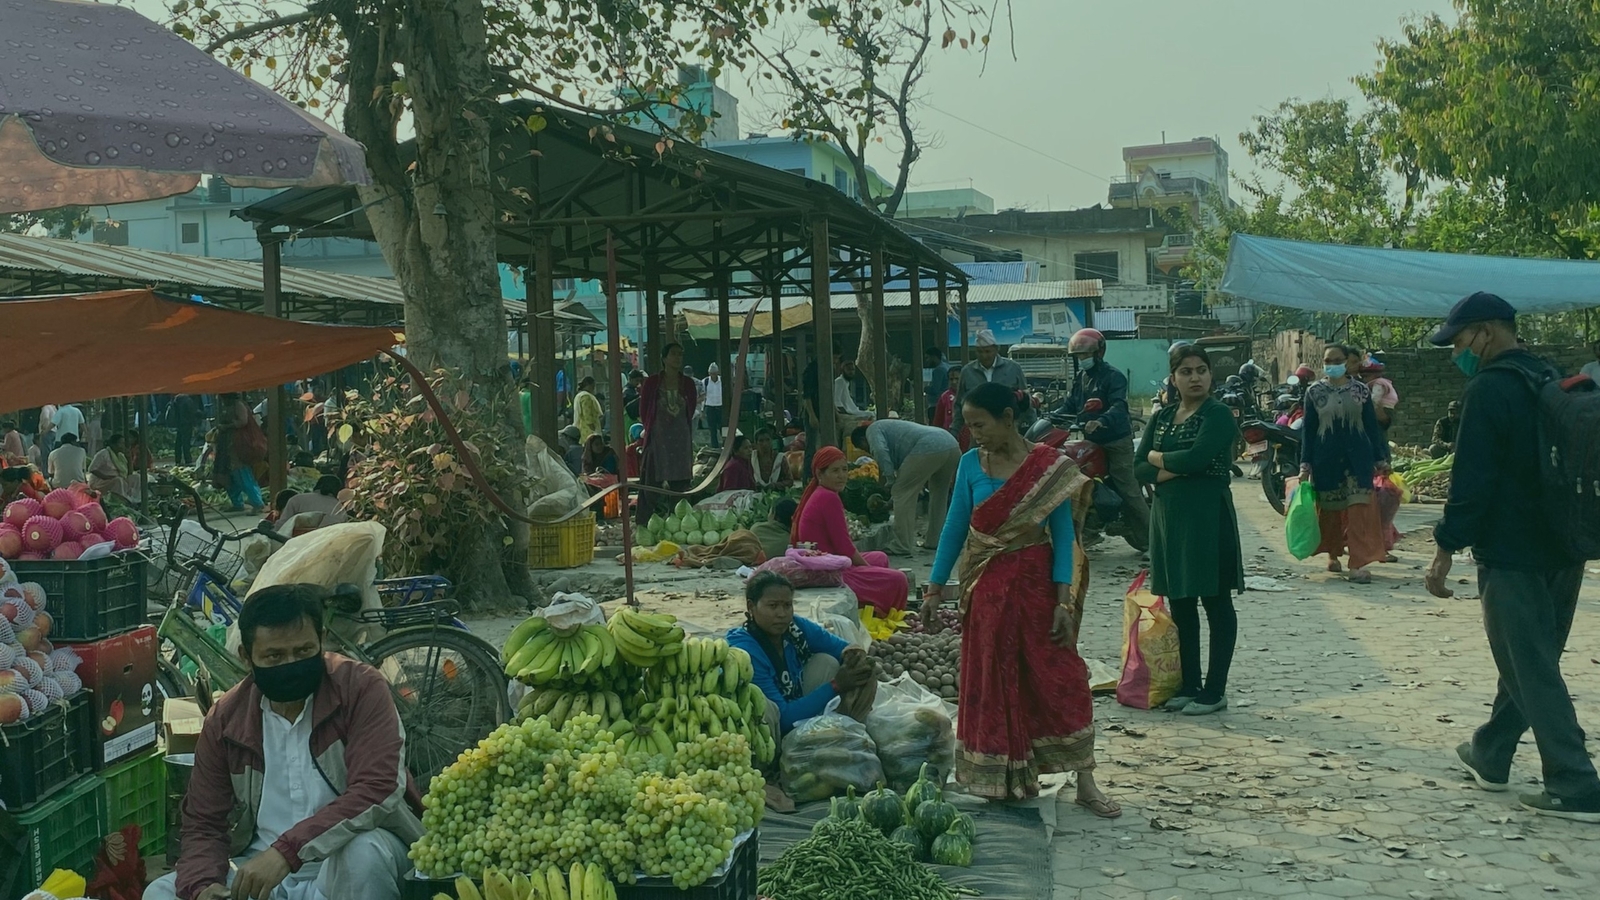 Women at a market in Nepal